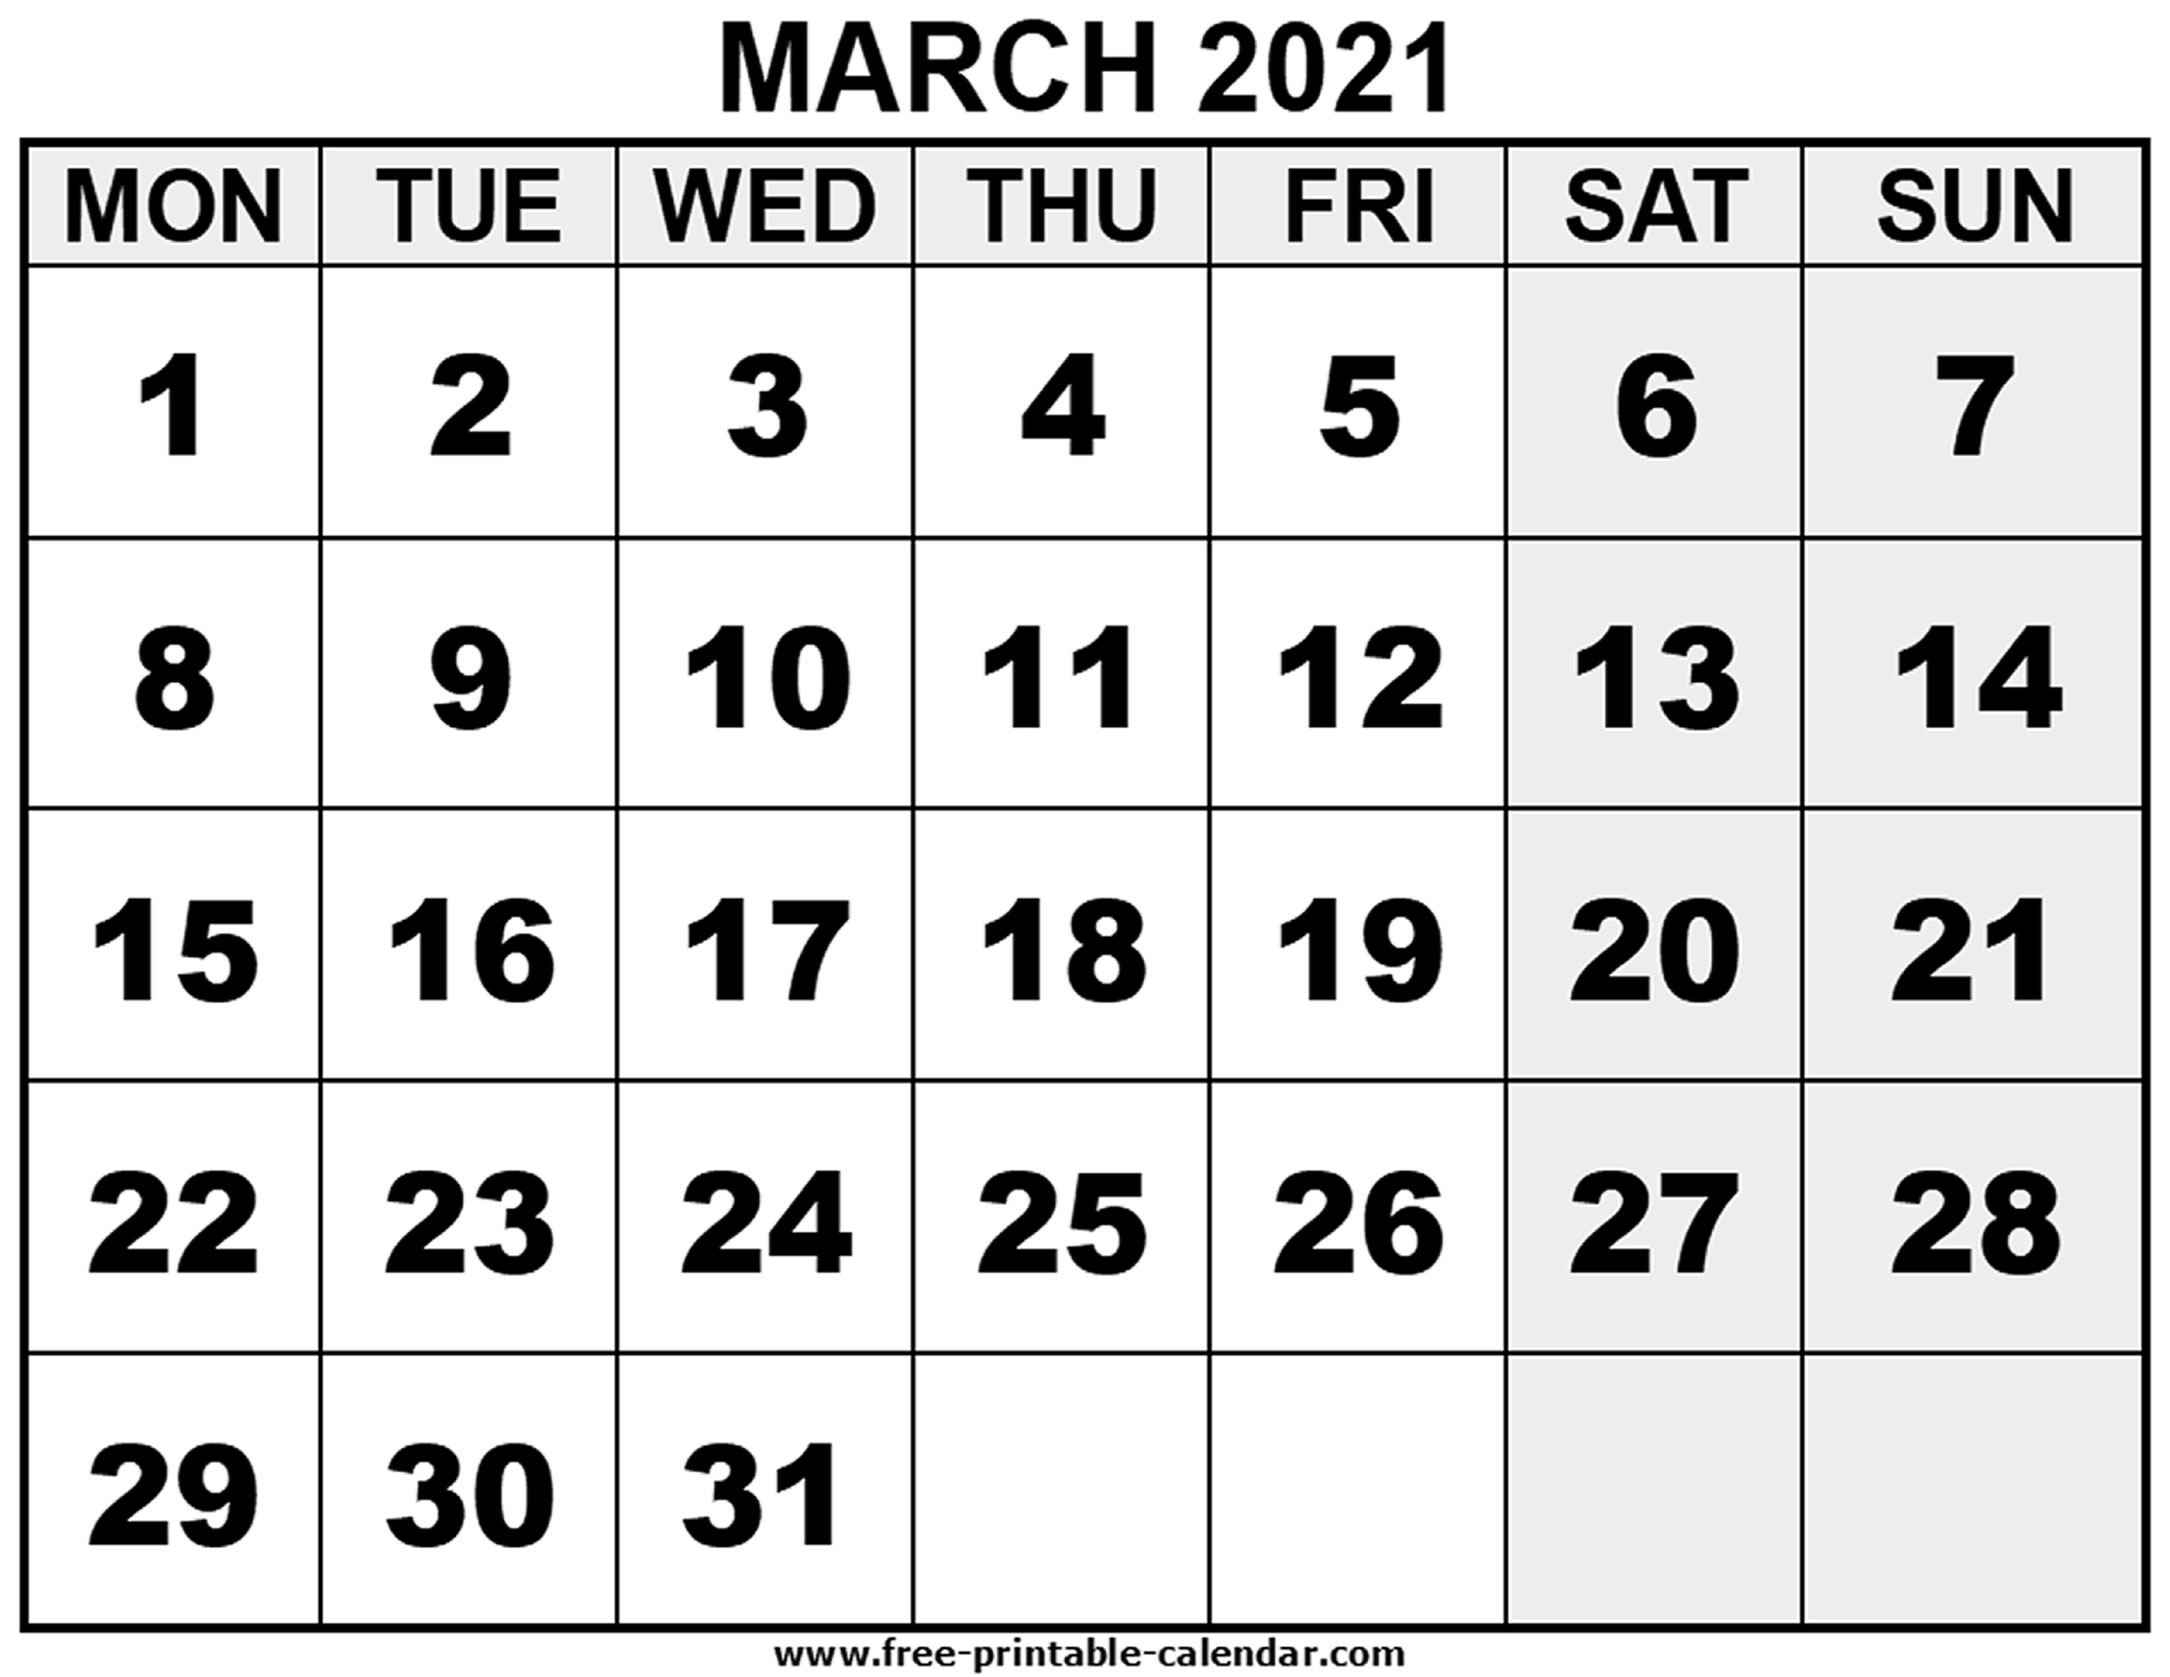 2021 March - Free-Printable-Calendar